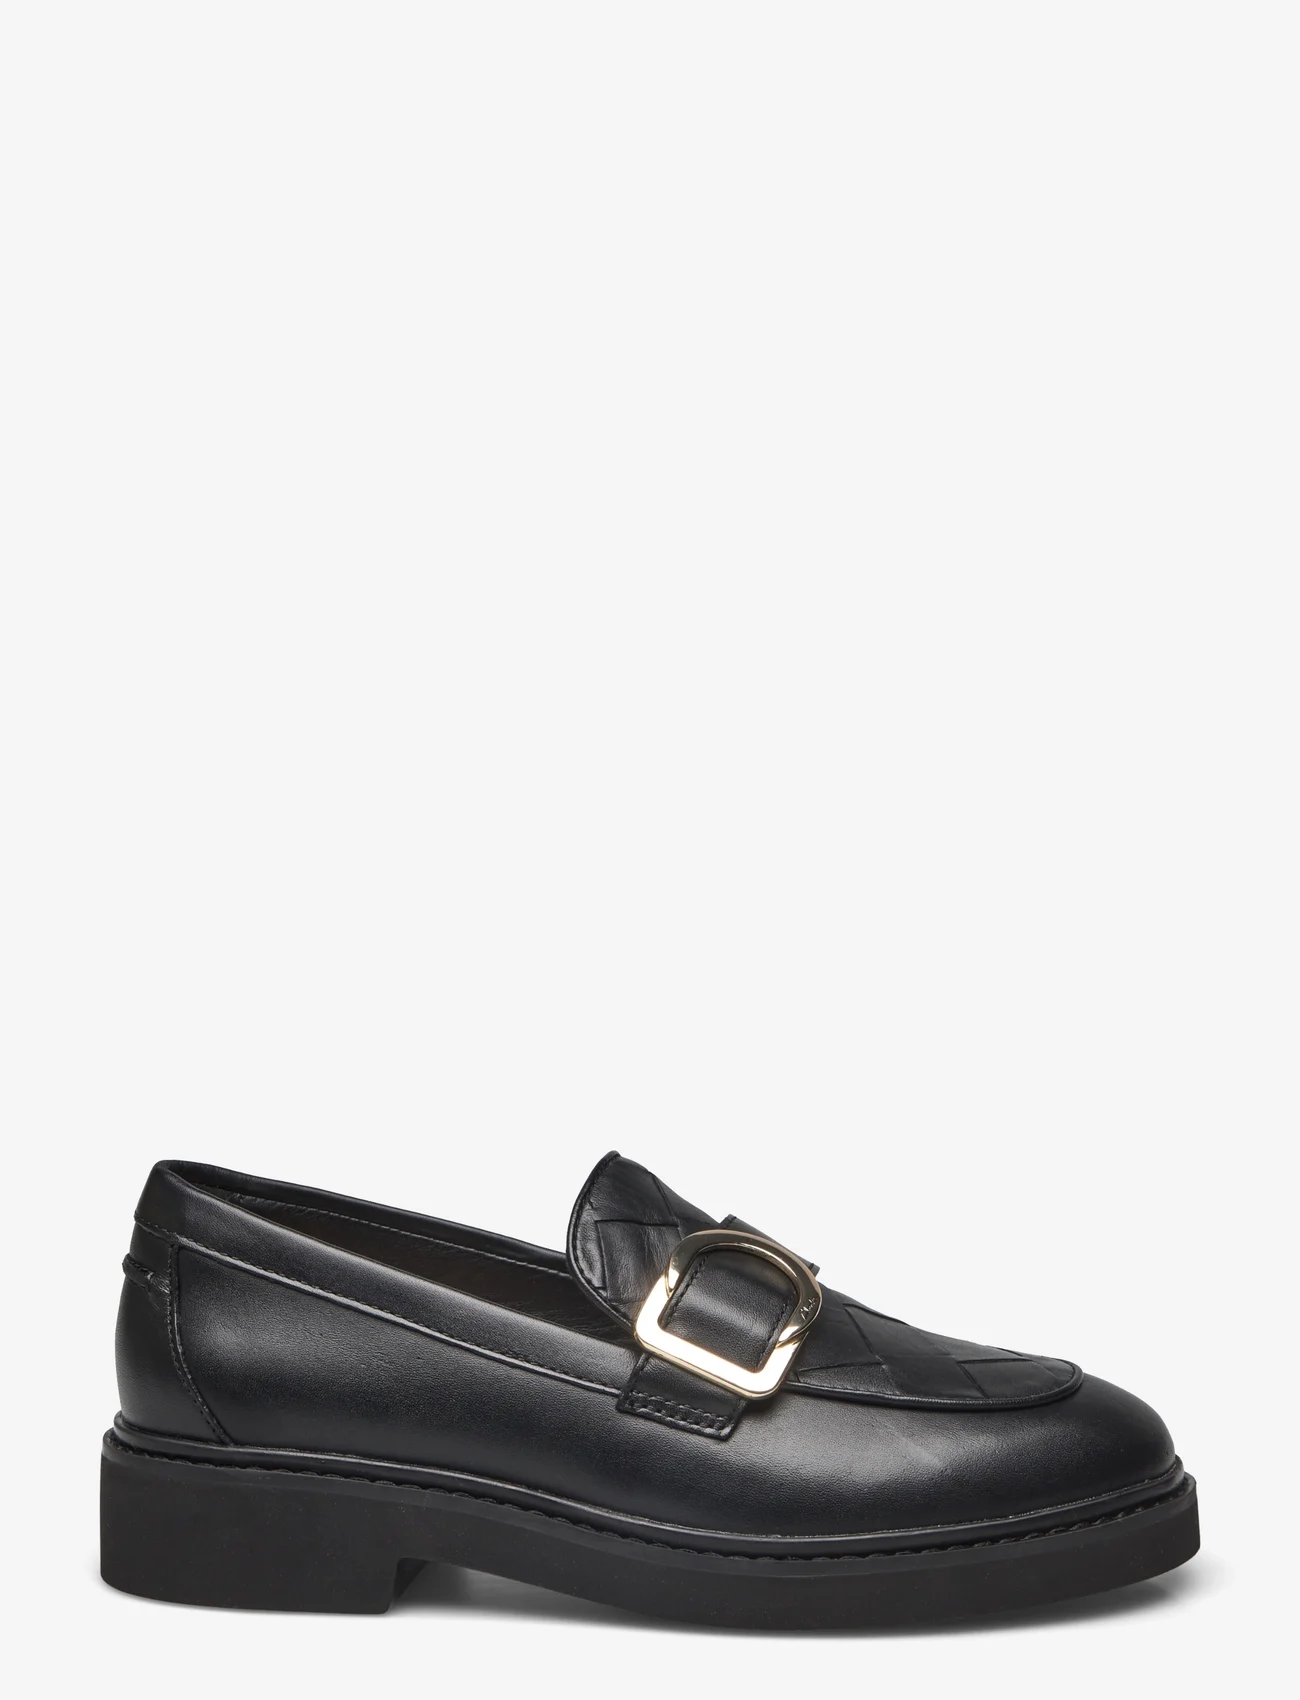 Clarks - Splend Penny D - loafers - 1216 black leather - 1